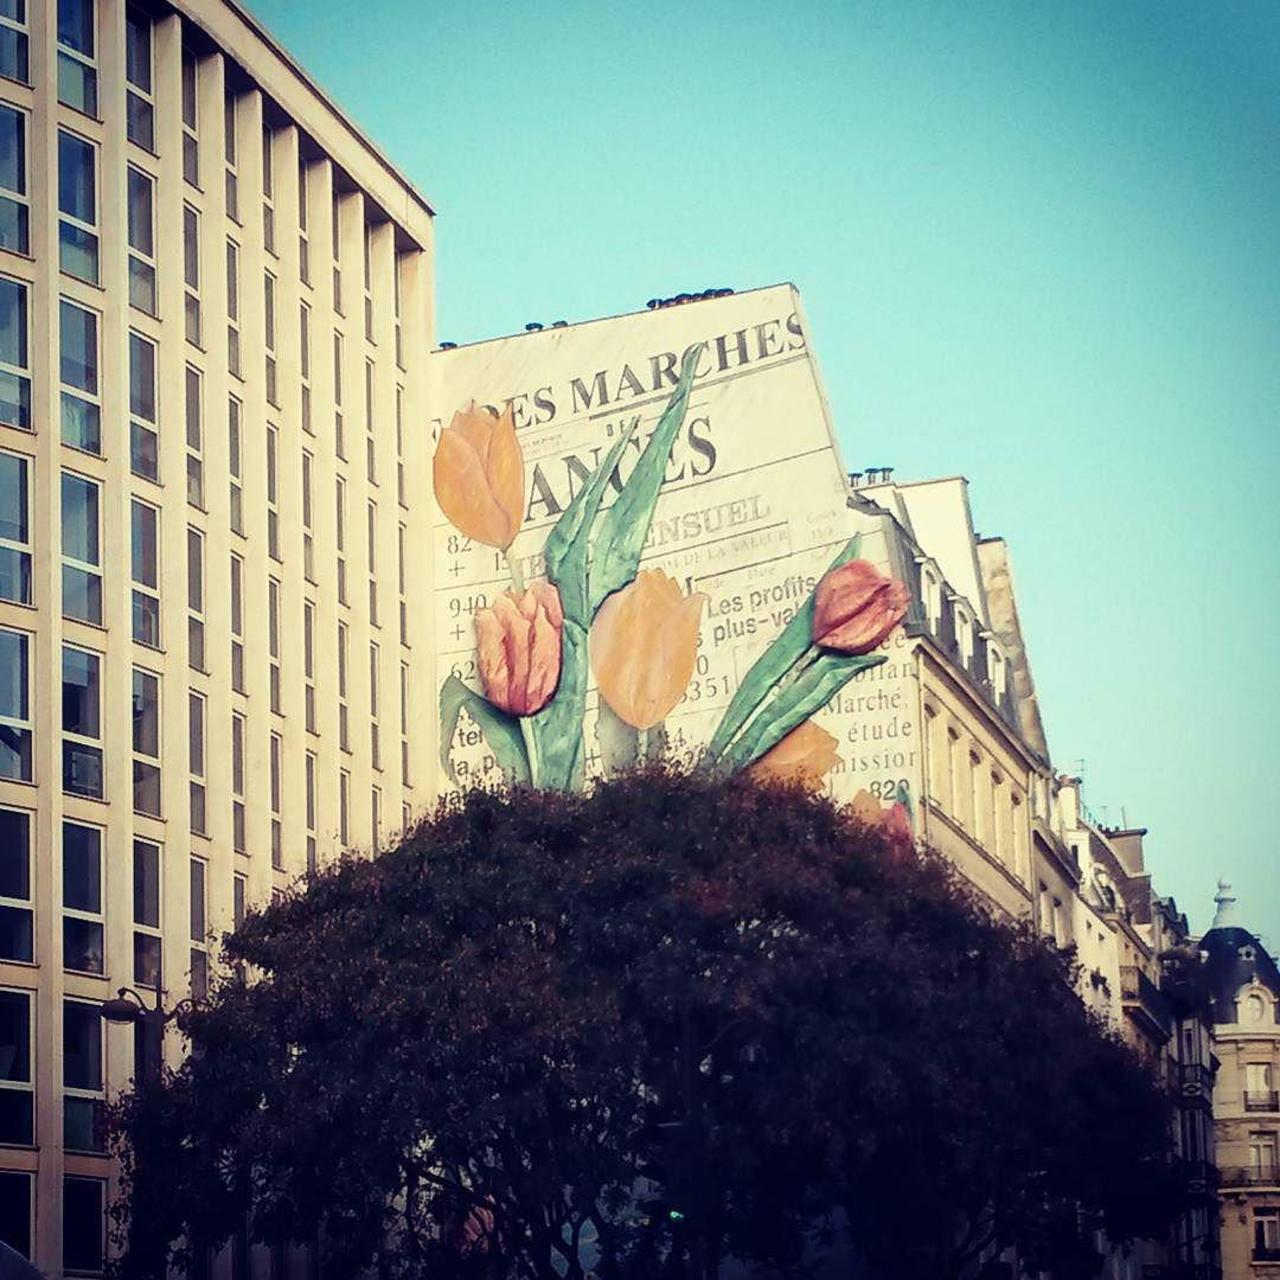 #Paris #graffiti photo by @le_cyclopede http://ift.tt/1GdJCnJ #StreetArt http://t.co/WOWOPcMmOu